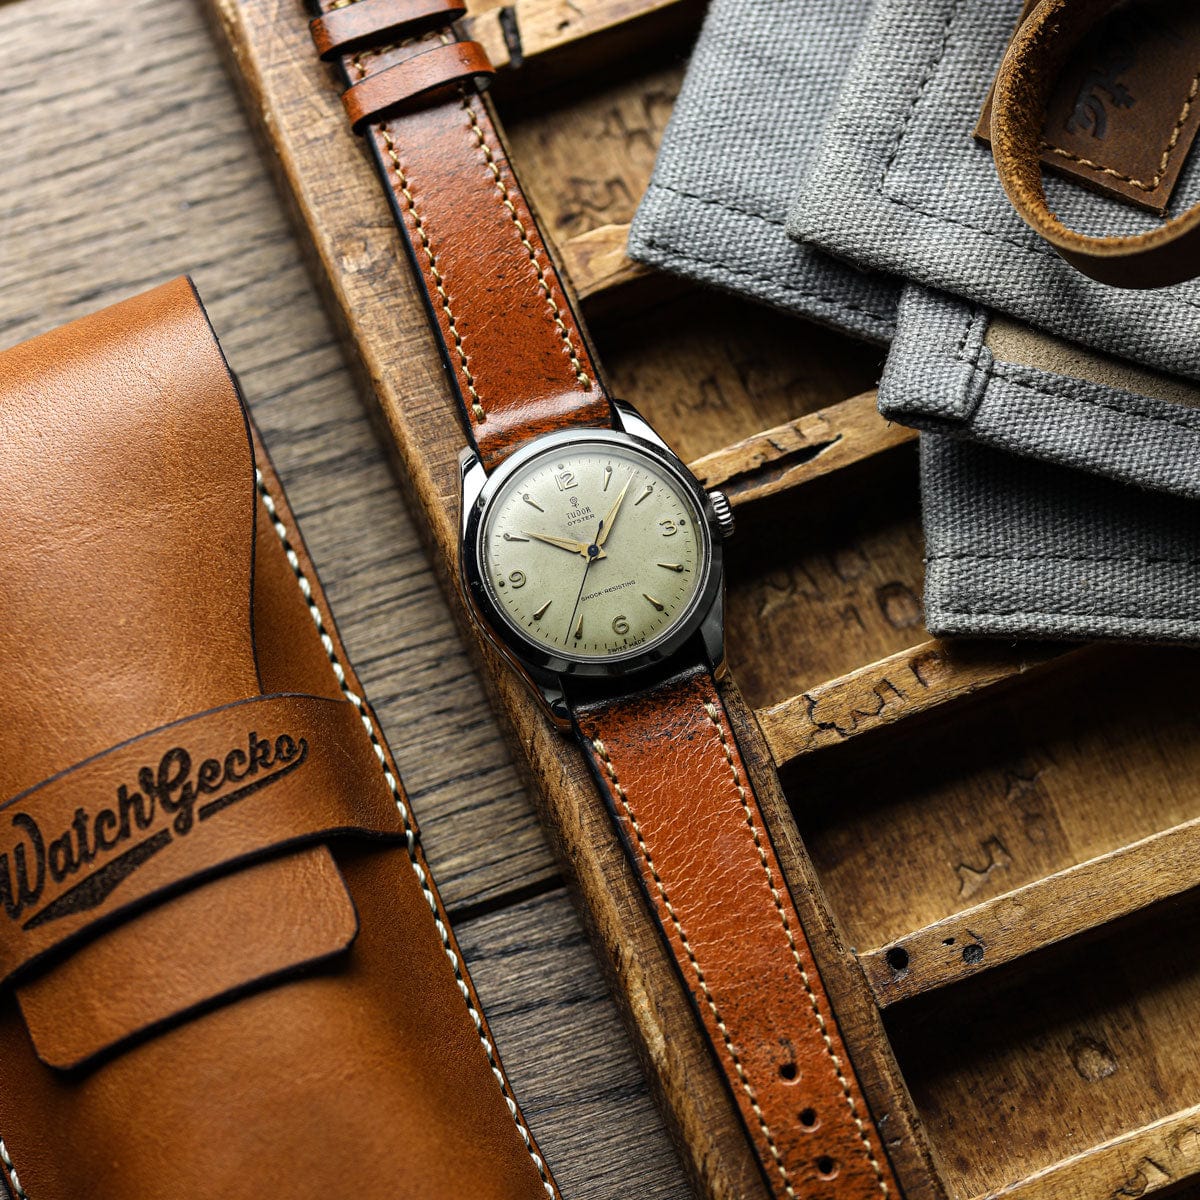 Radstock Vintage Genuine Leather Watch Strap - Light Brown